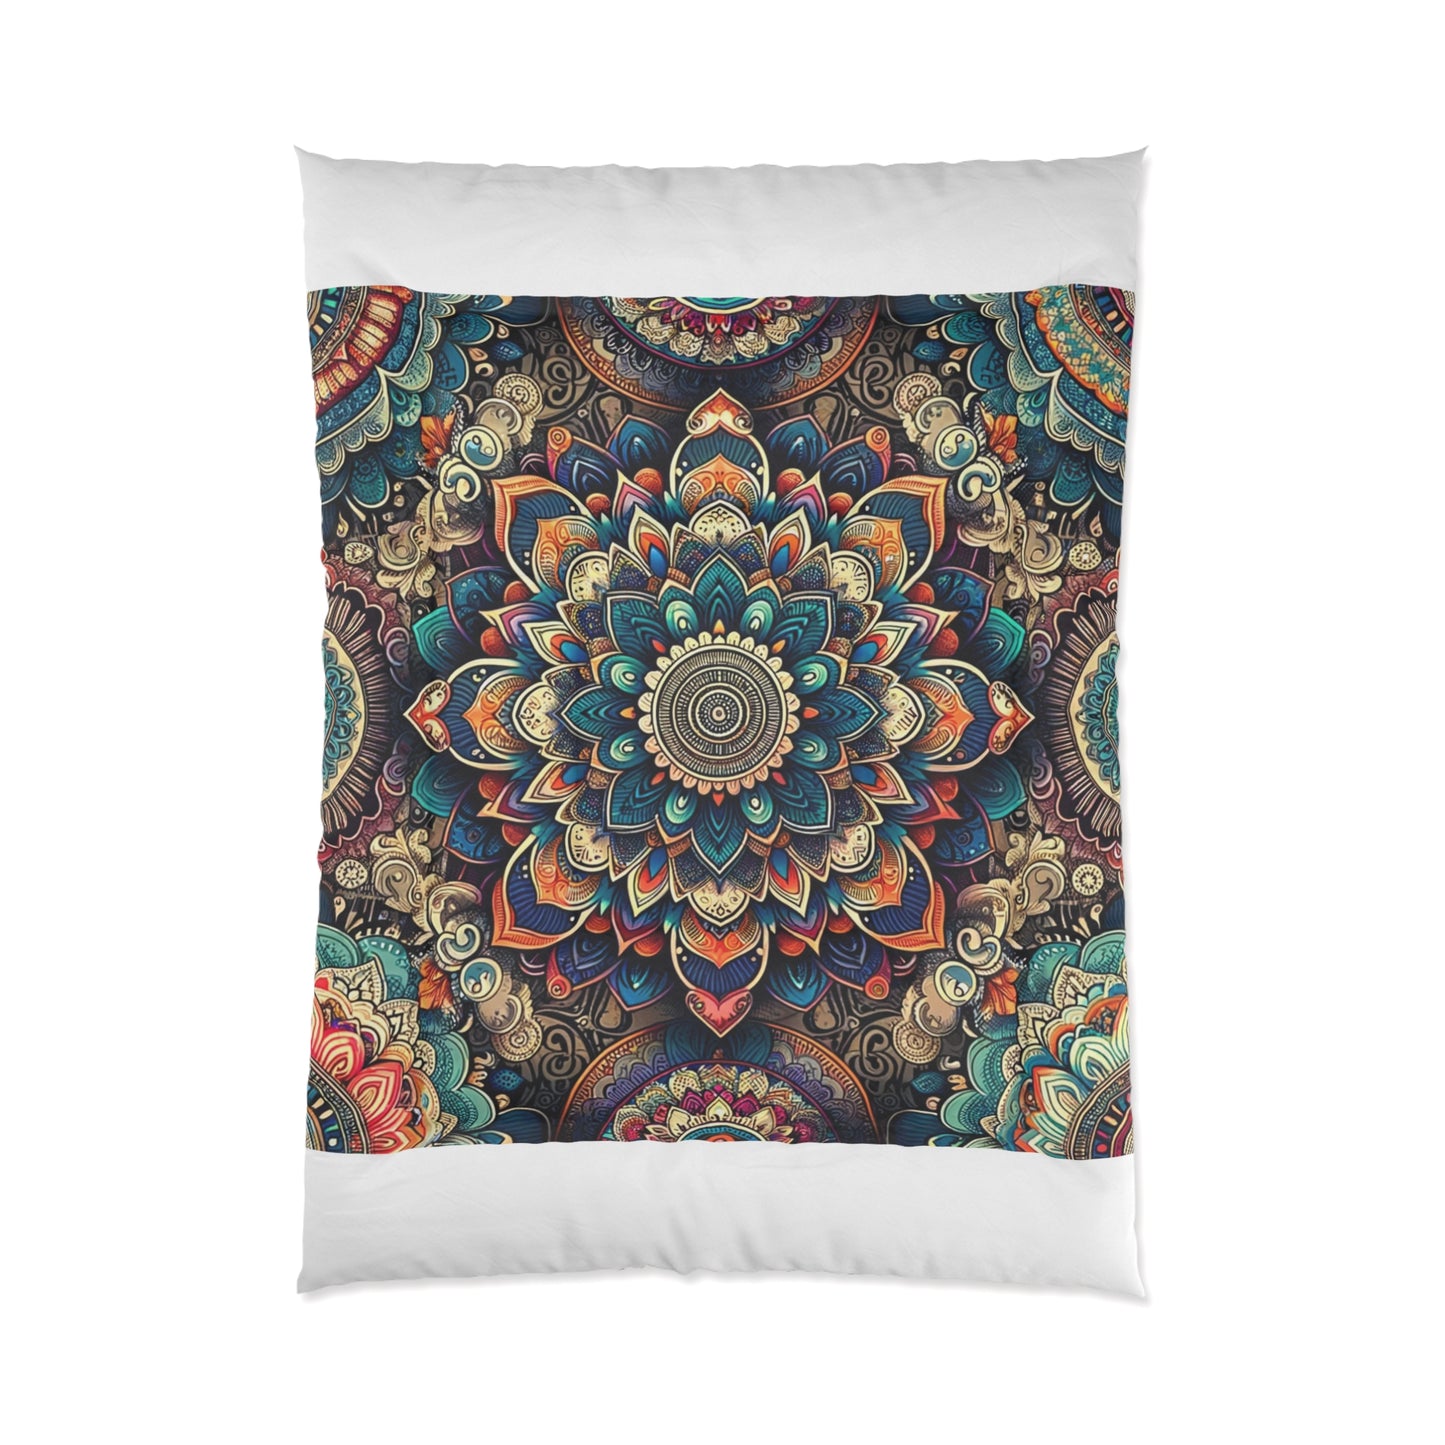 Enchanted Bohemian Mandala Comforter - Spiritual Elegance in Vibrant Hues